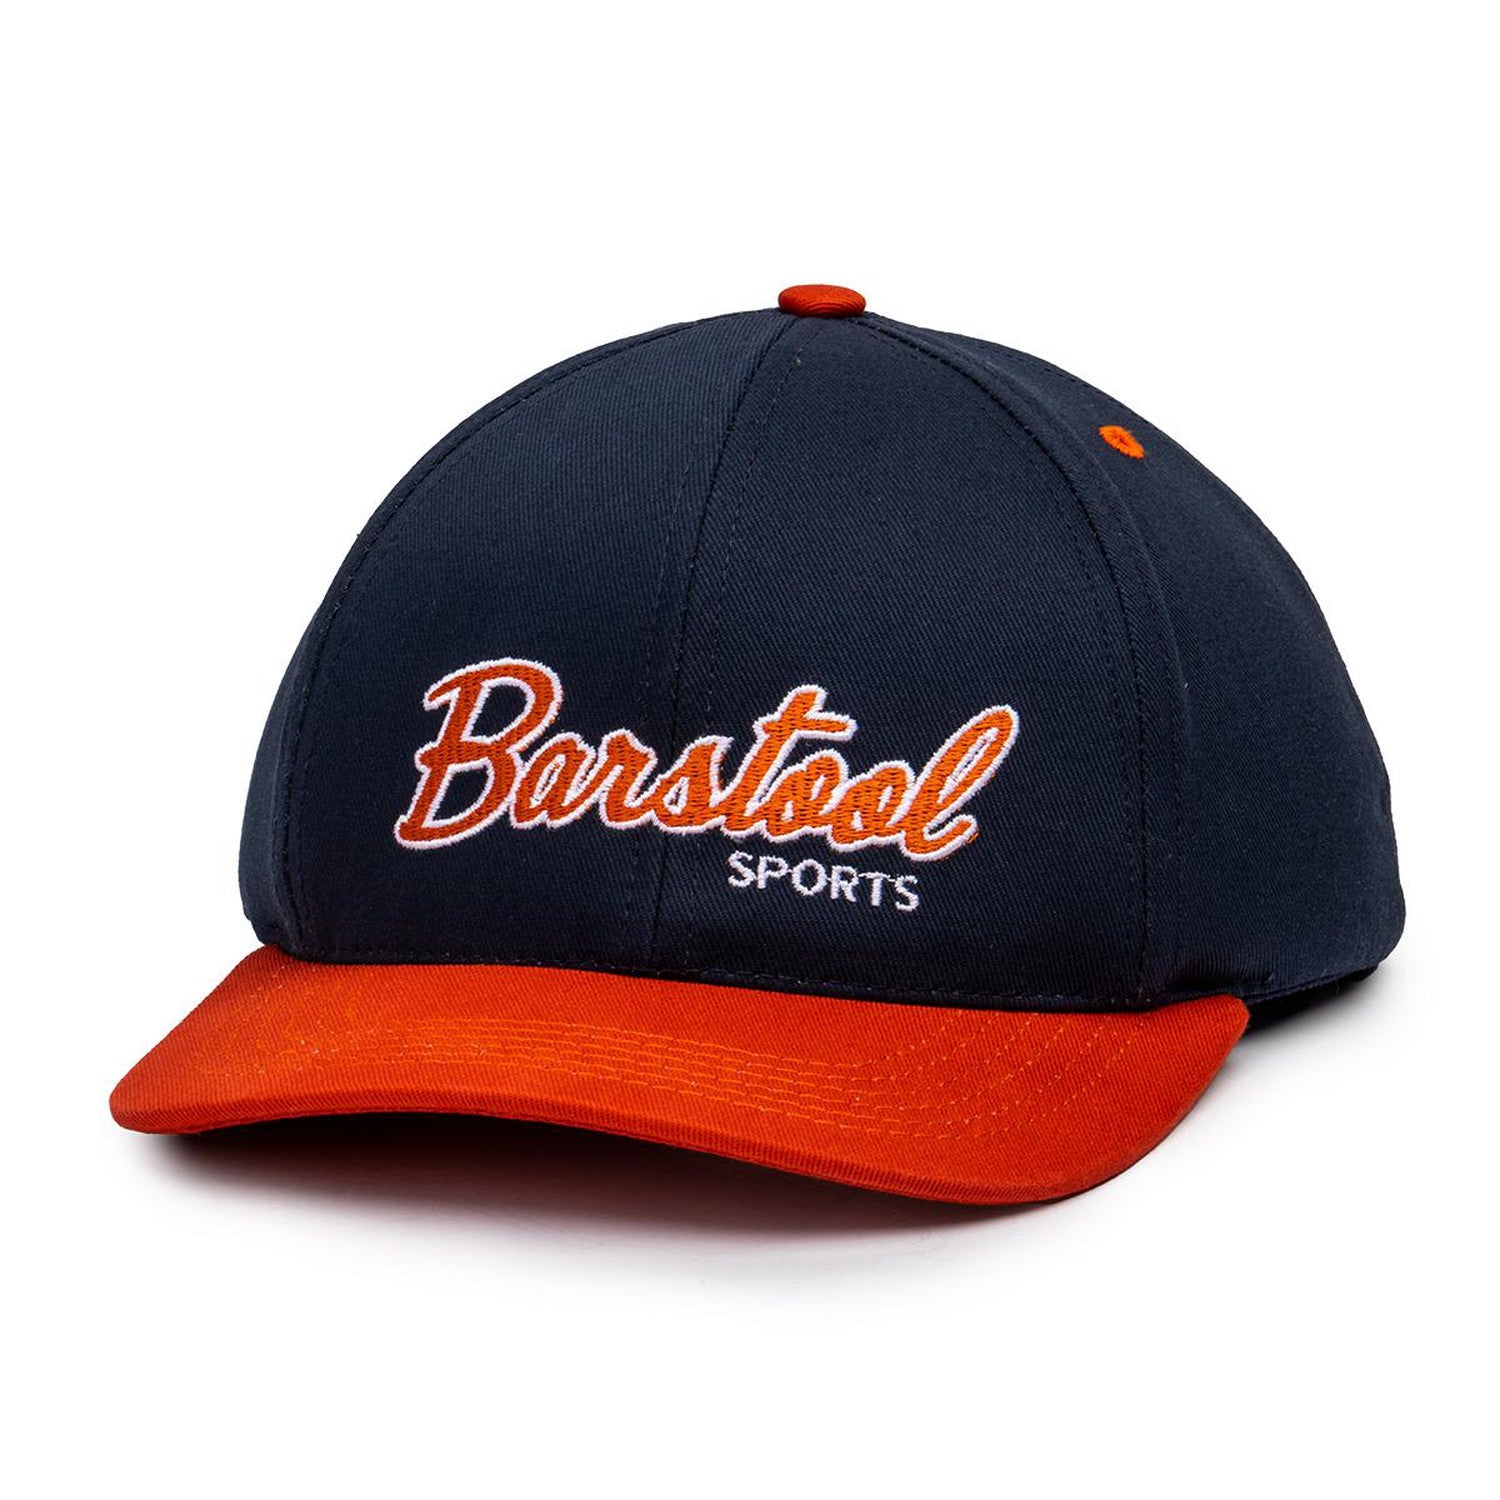 Barstool Sports CHI Hat-Hats-Barstool Sports-Barstool Sports